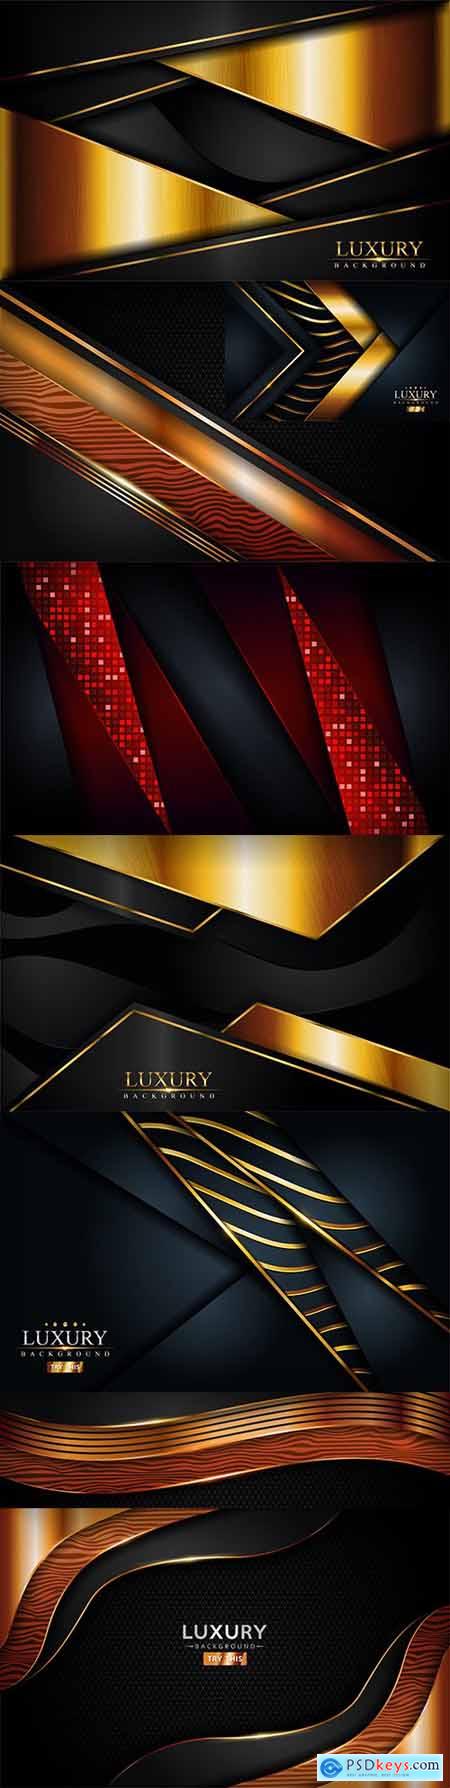 Luxury abstract dark background with golden element